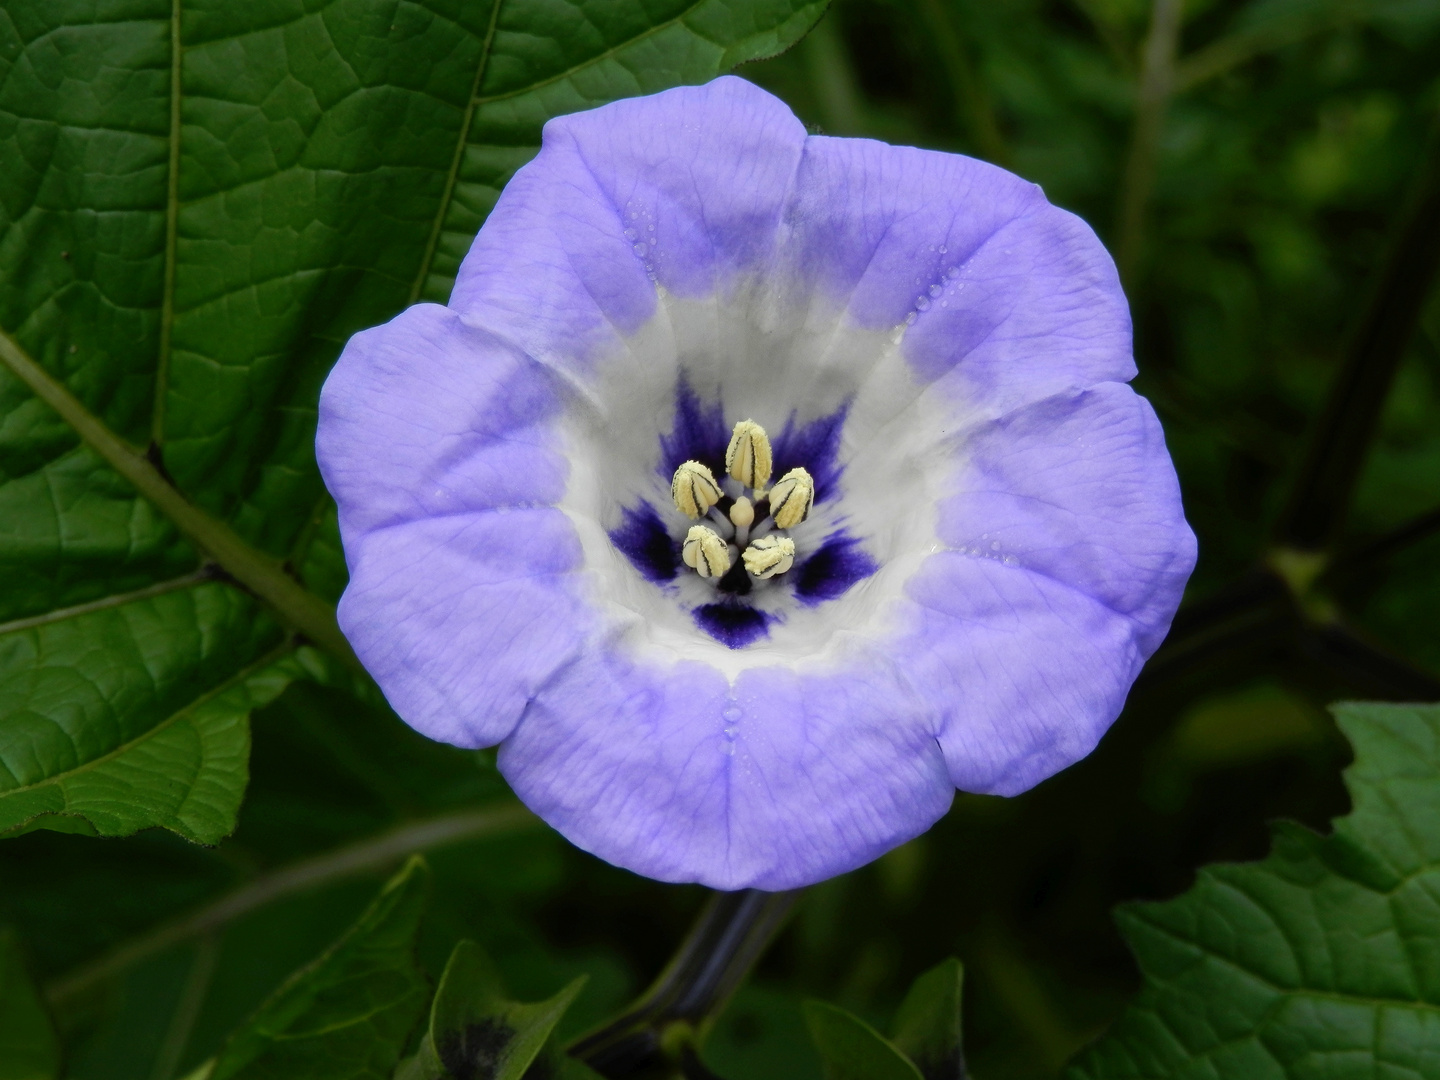 Blaue Lampionblume oder Giftbeere